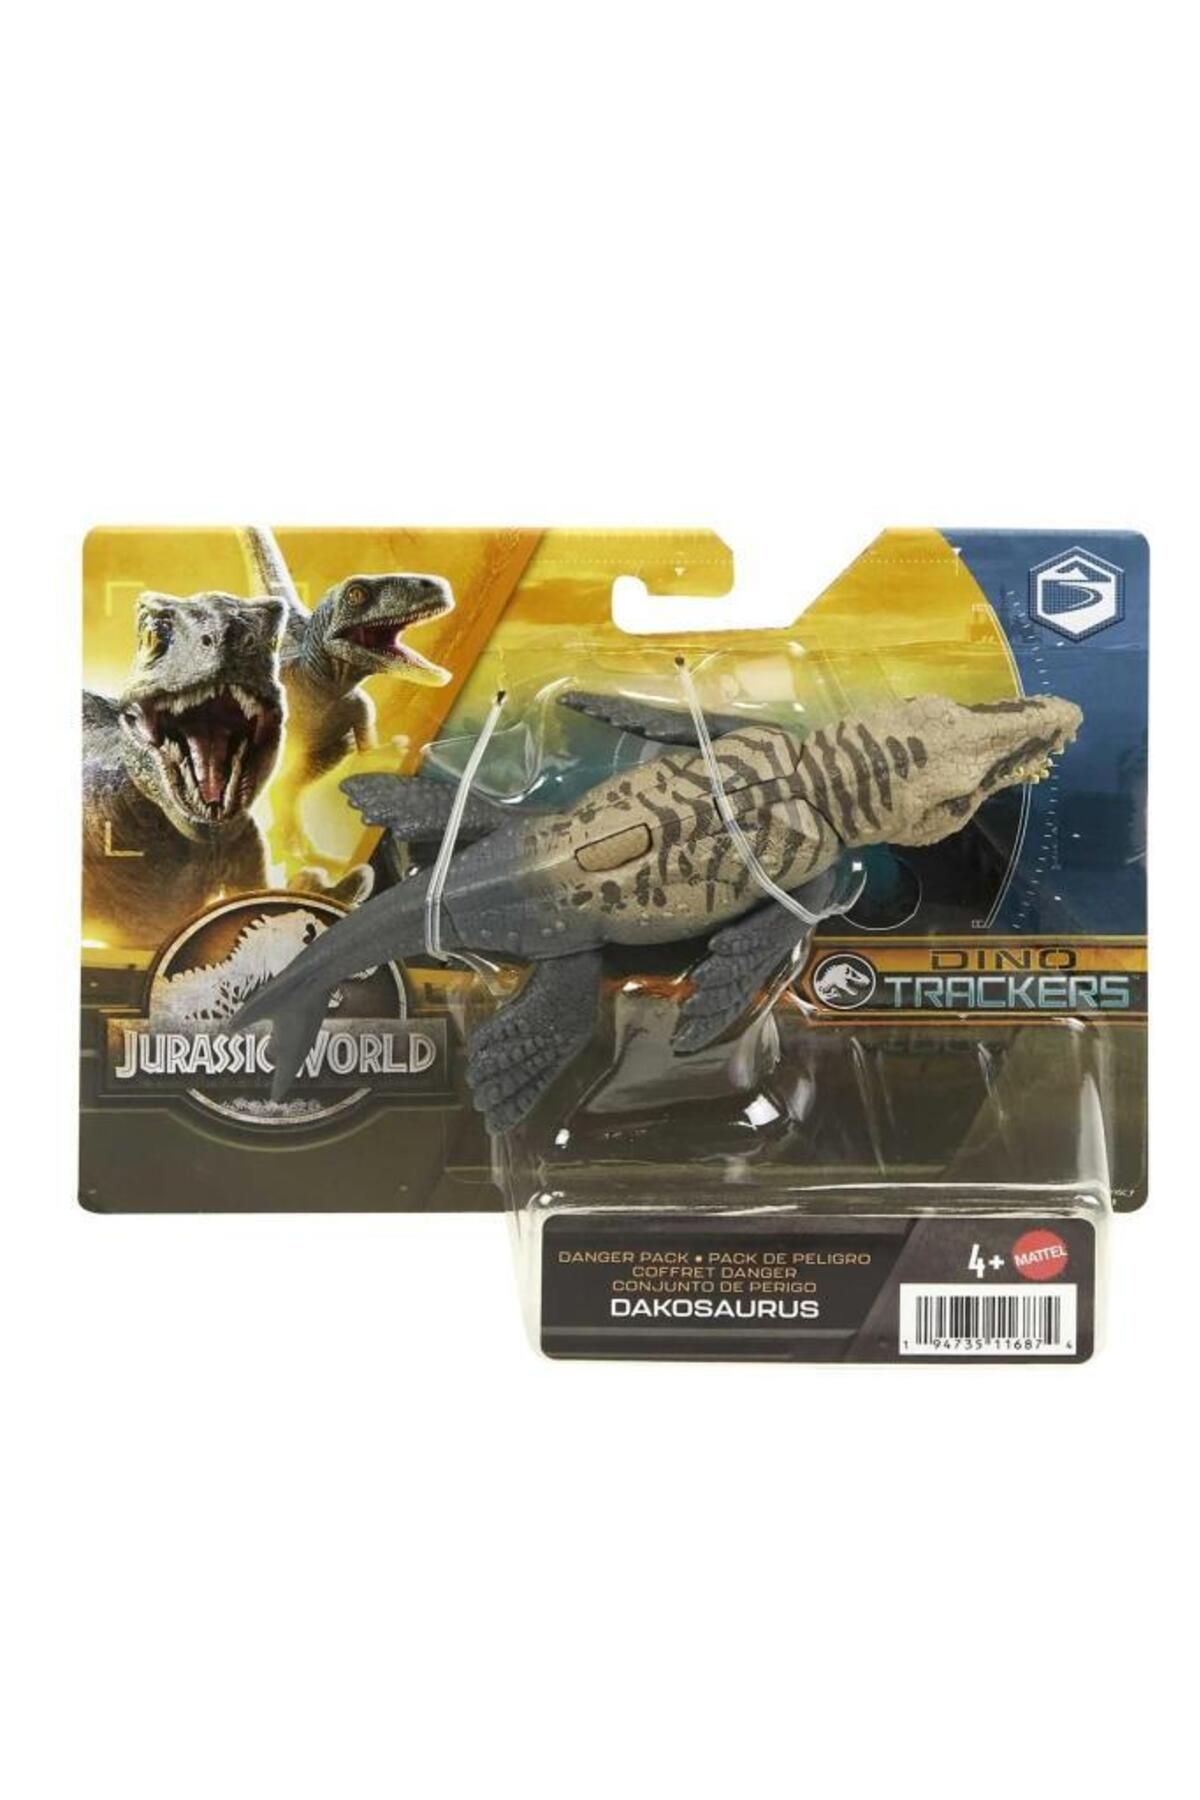 Jurassic World Tehlikeli Dinozor Paketi DAKOSAURUS HLN49-HLN57